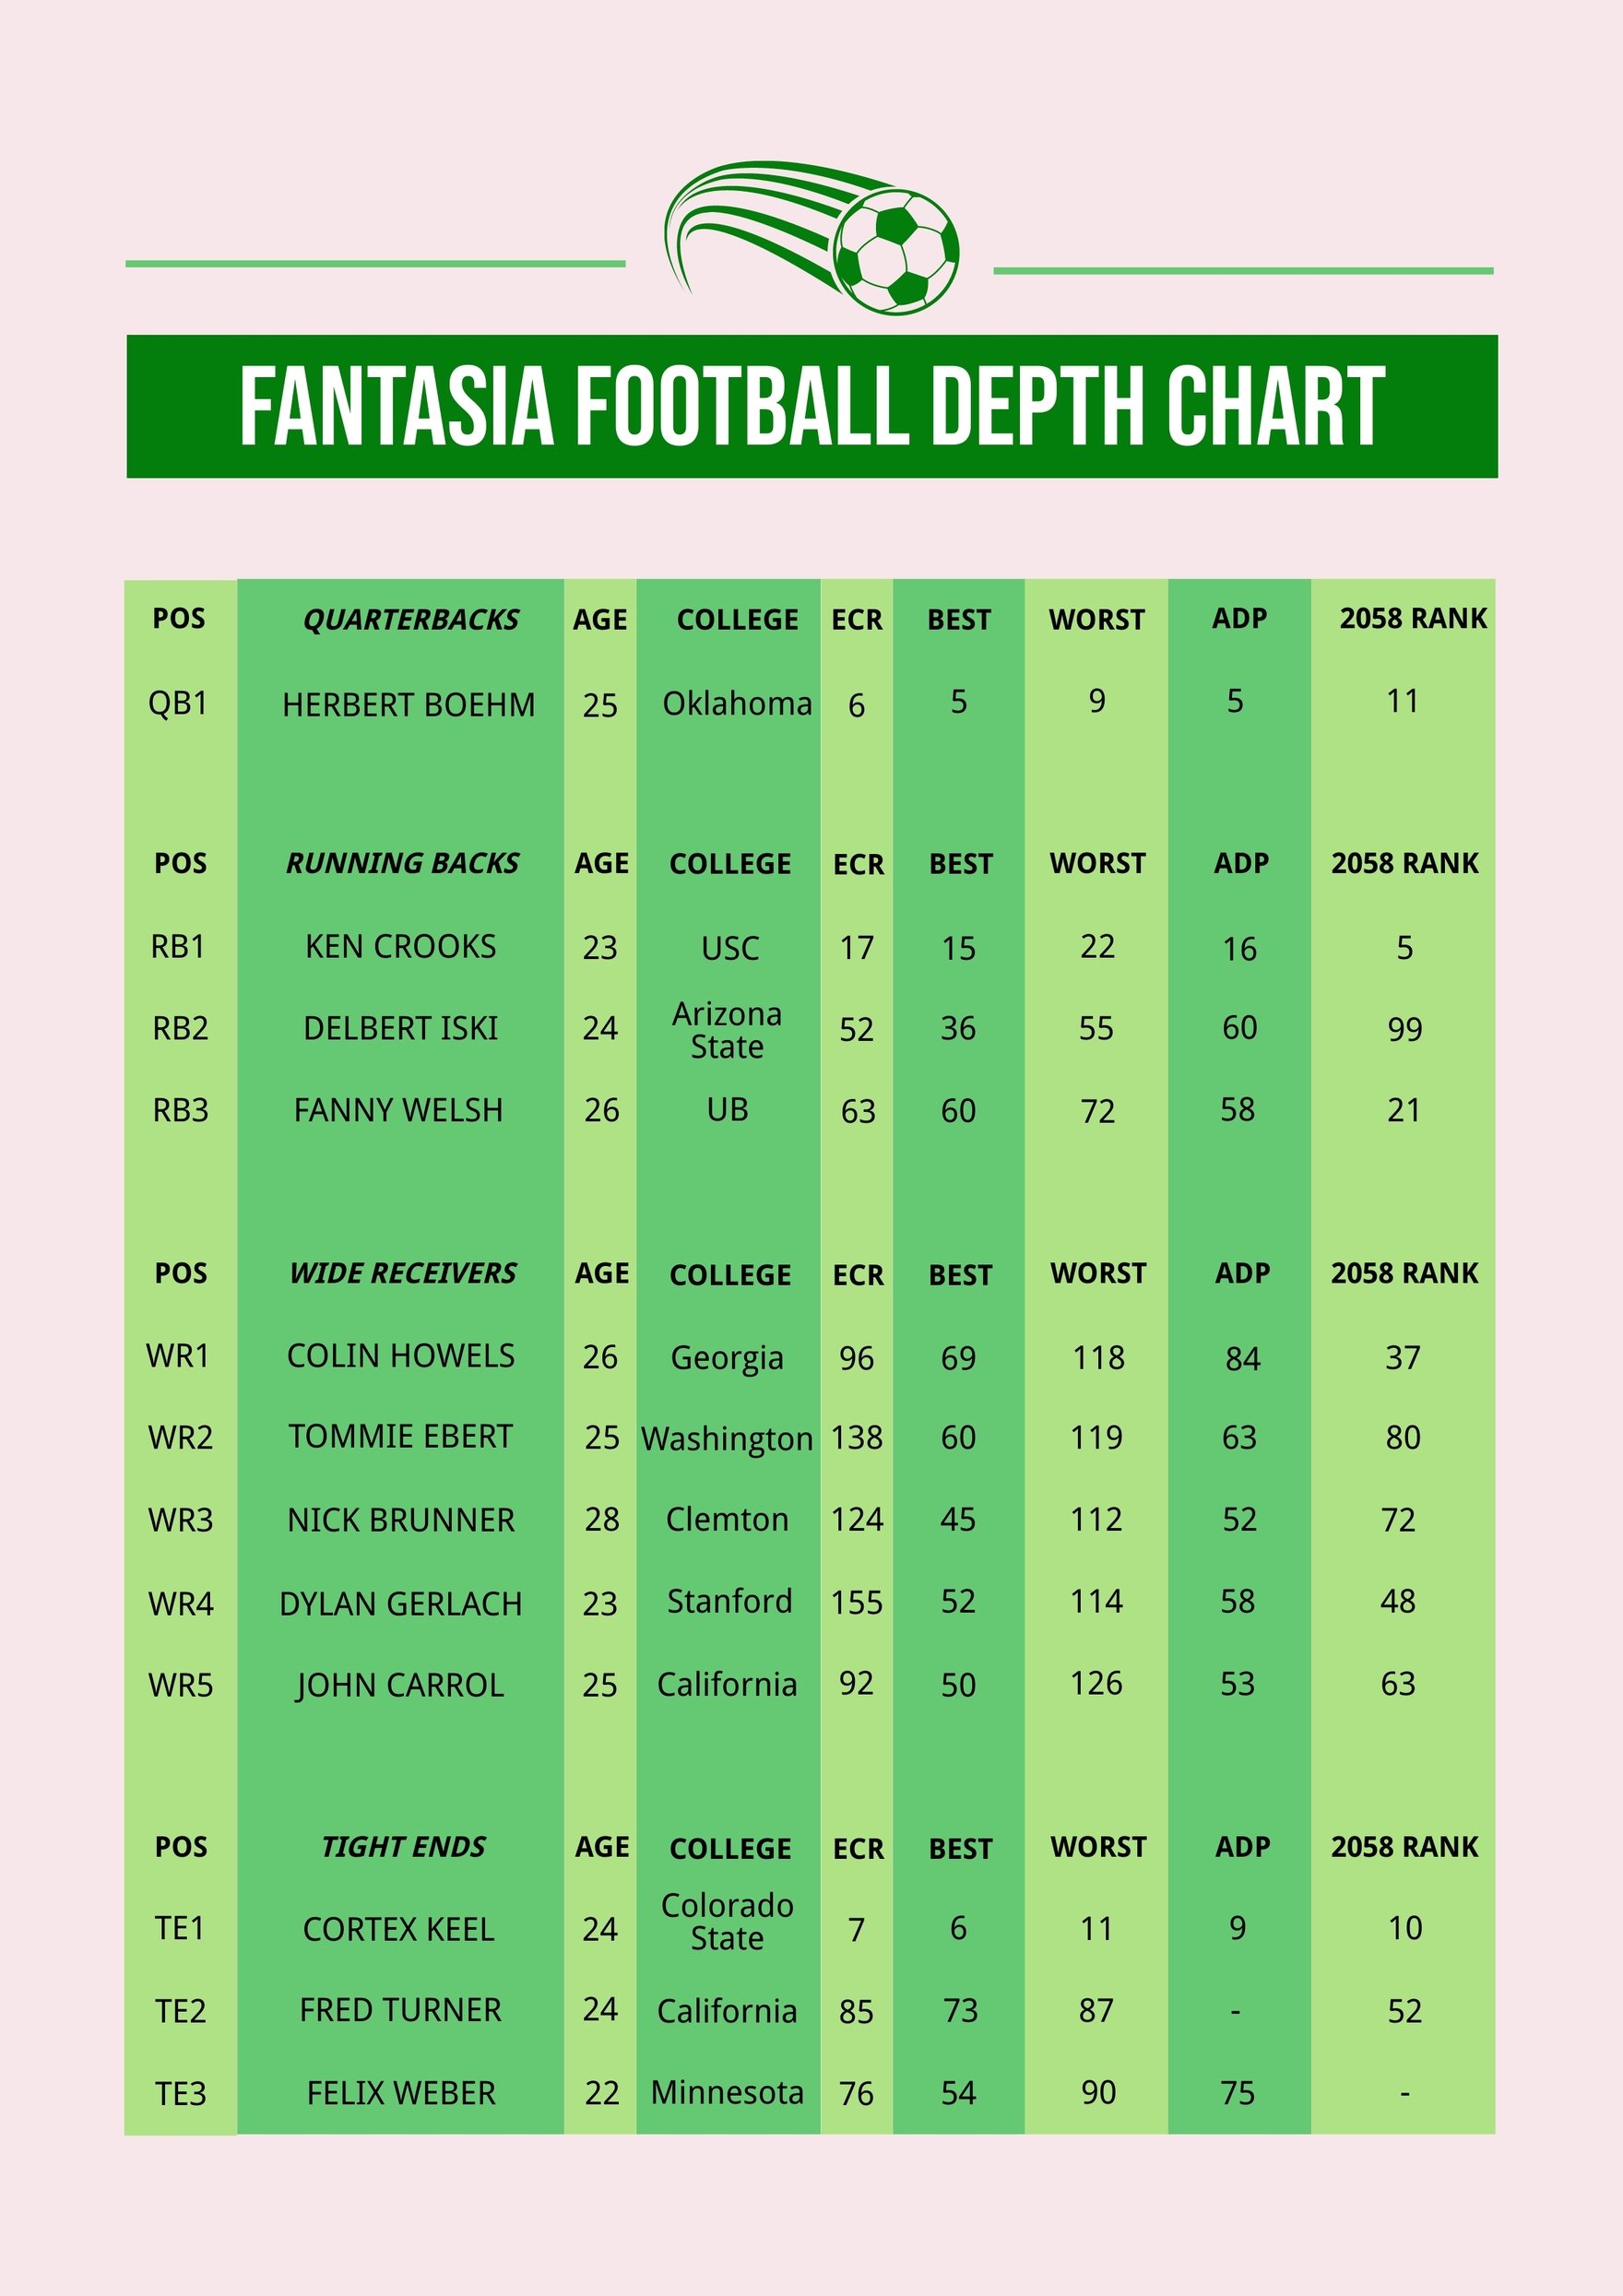 Football Depth Chart in PDF, Illustrator